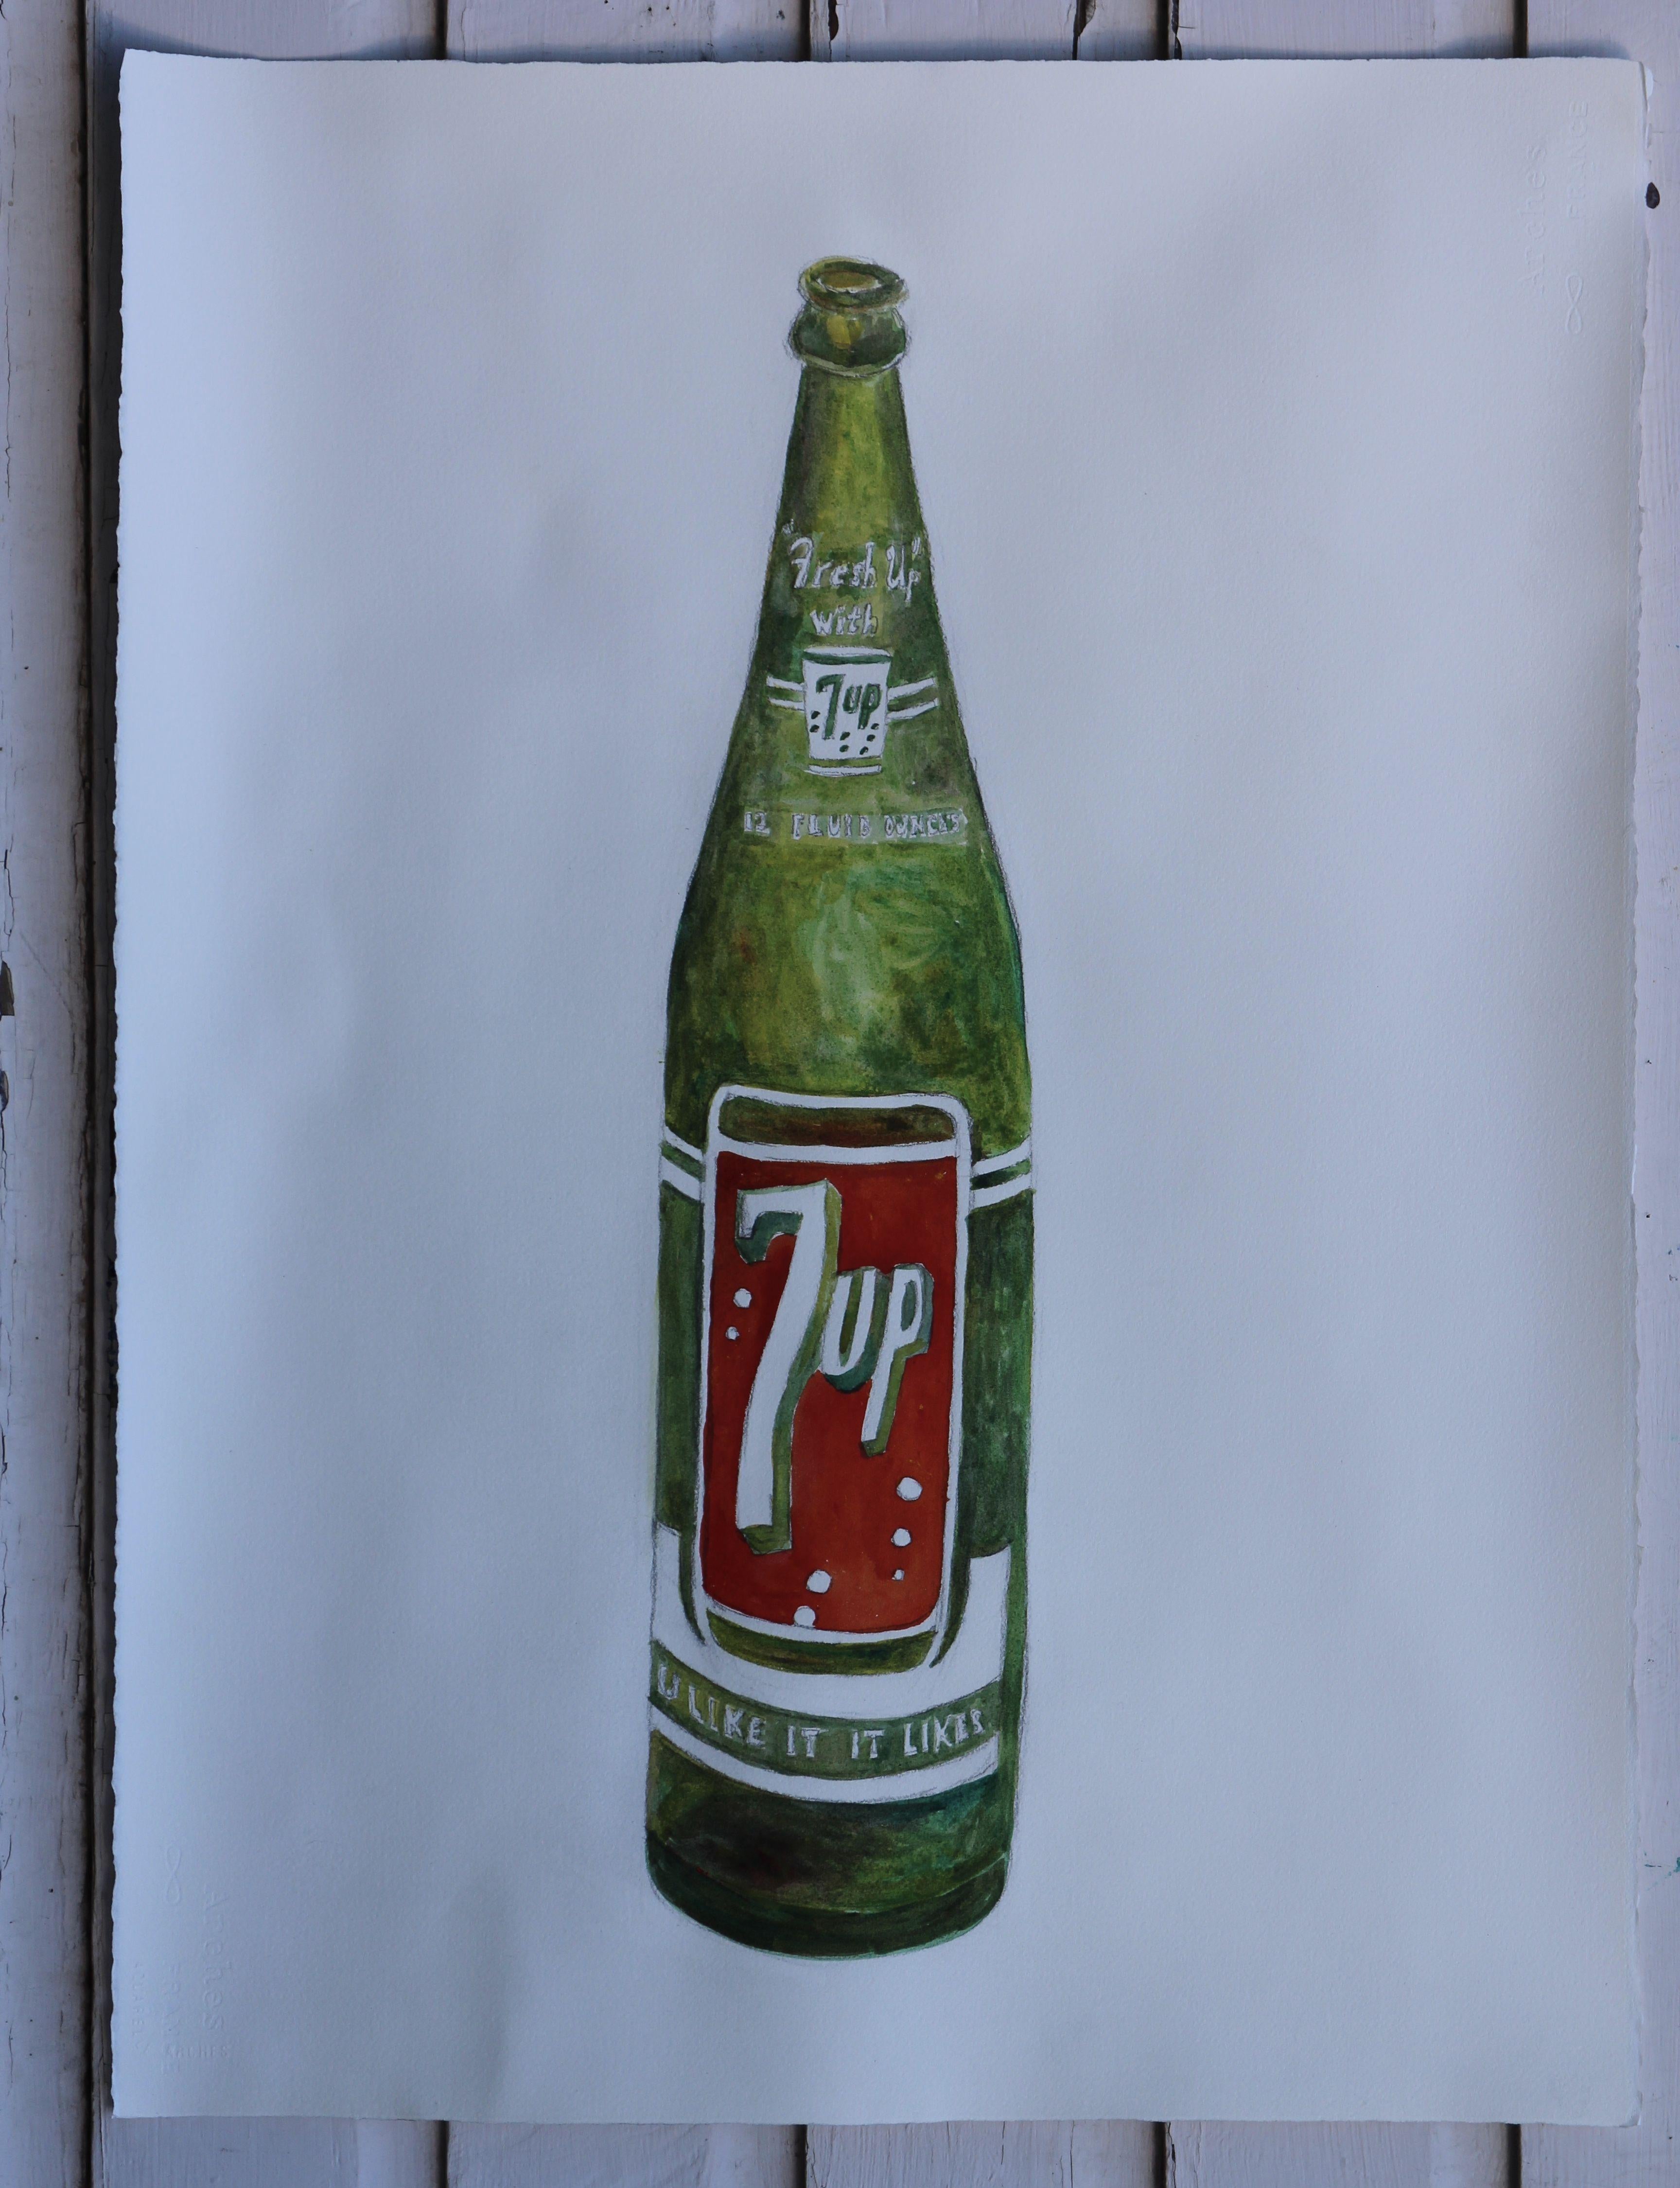 7-up bottle, Painting, Watercolor on Paper - Pop Art Art by John Kilduff